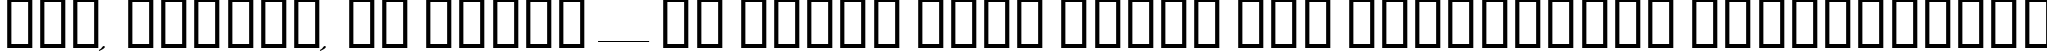 Пример написания шрифтом Palace Script MT Semi Bold текста на украинском